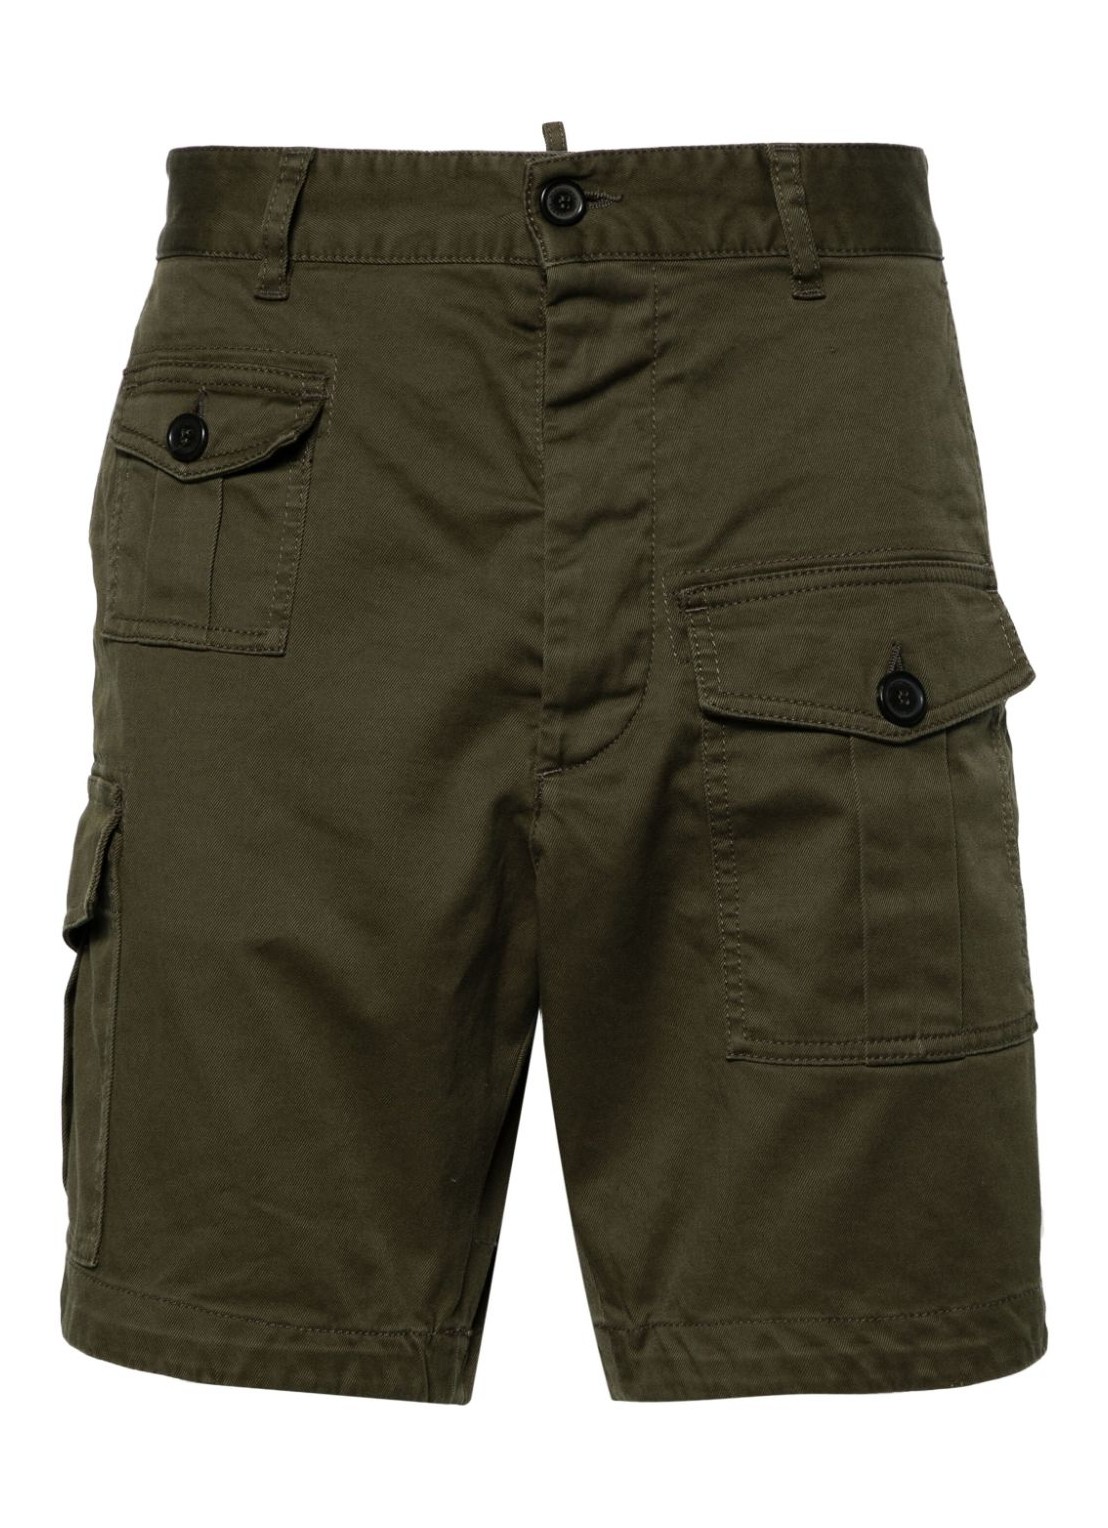 Pantalon corto dsquared short pant man sexy cargo shorts s74mu0780s39021 695 talla 44
 